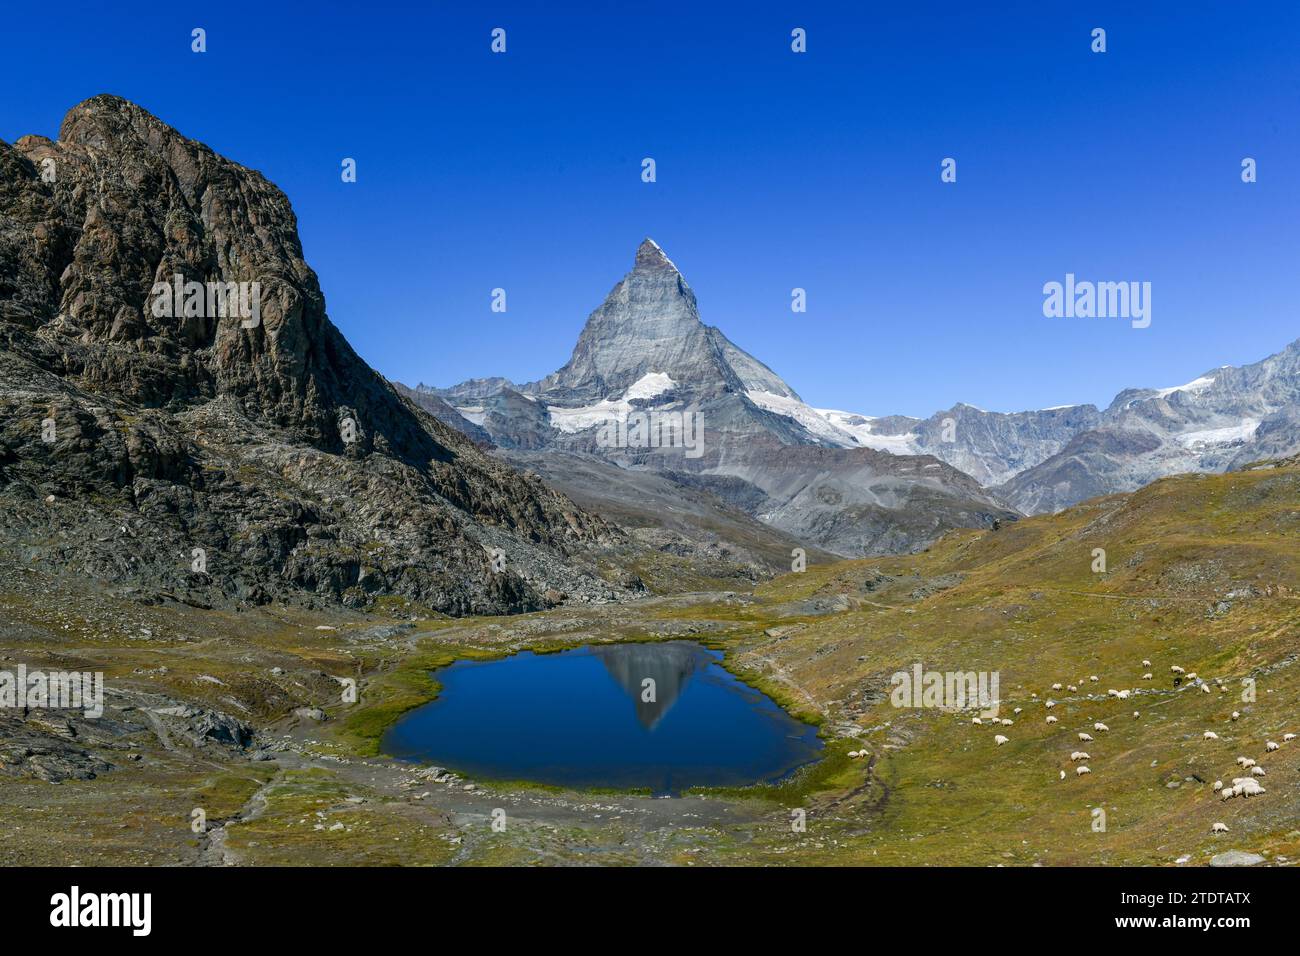 Serene summer landscape, the famous Matterhorn mountain in Zermatt, Switzerland, gently mirrors its grandeur in the calm waters of Riffelsee. Breathta Stock Photo